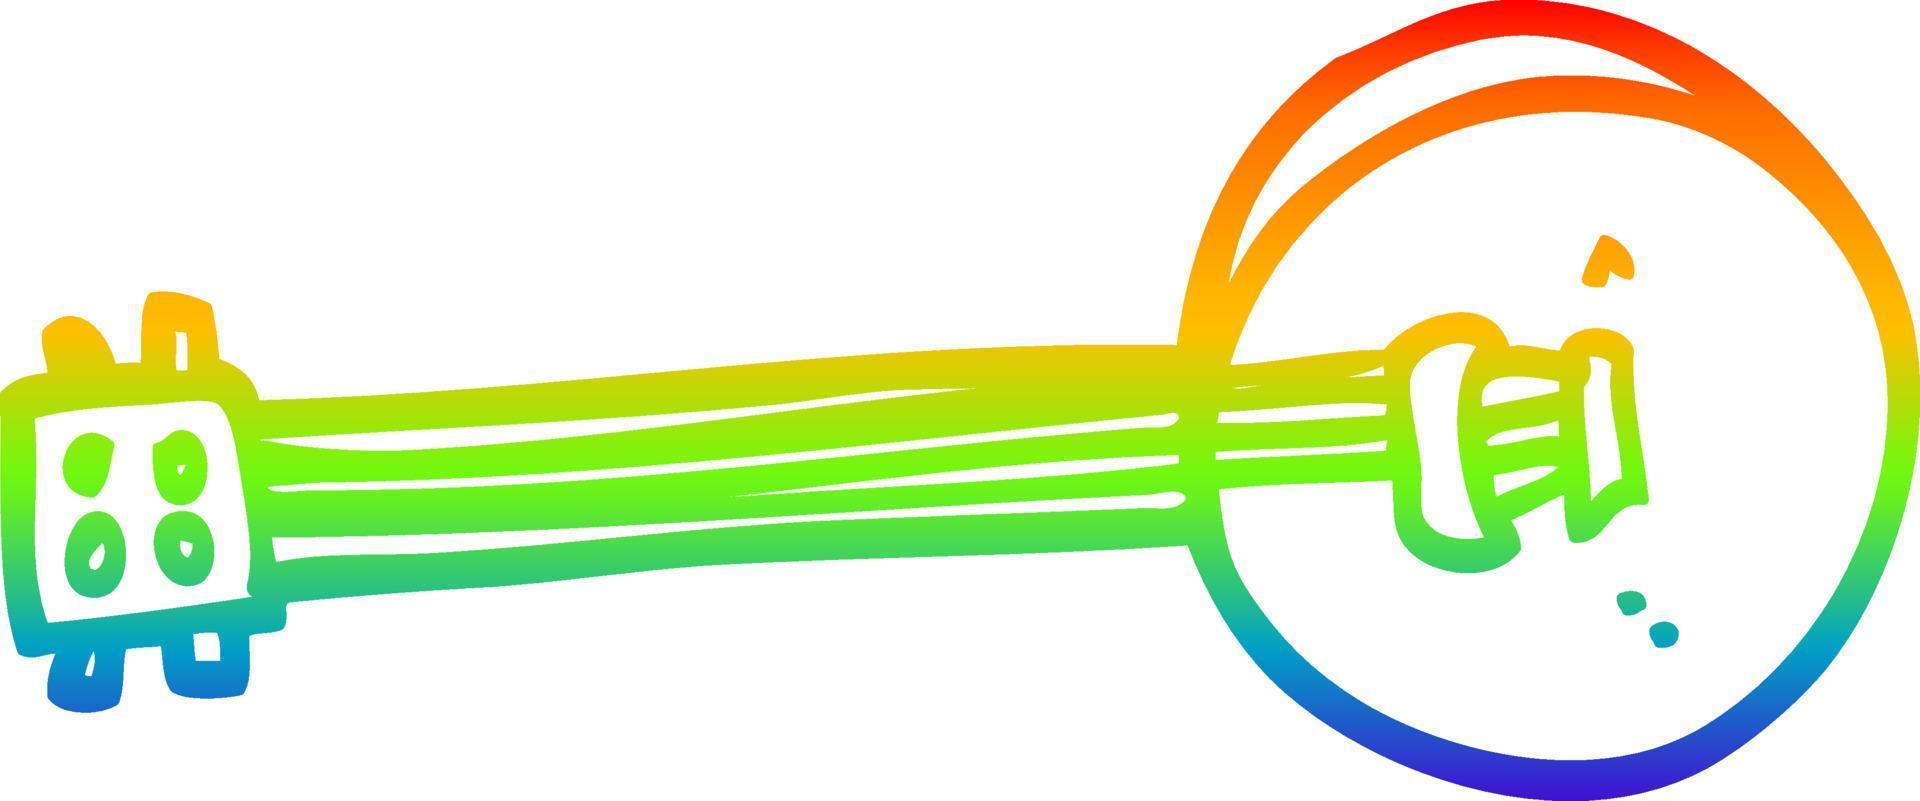 arco iris gradiente línea dibujo dibujos animados banjo vector